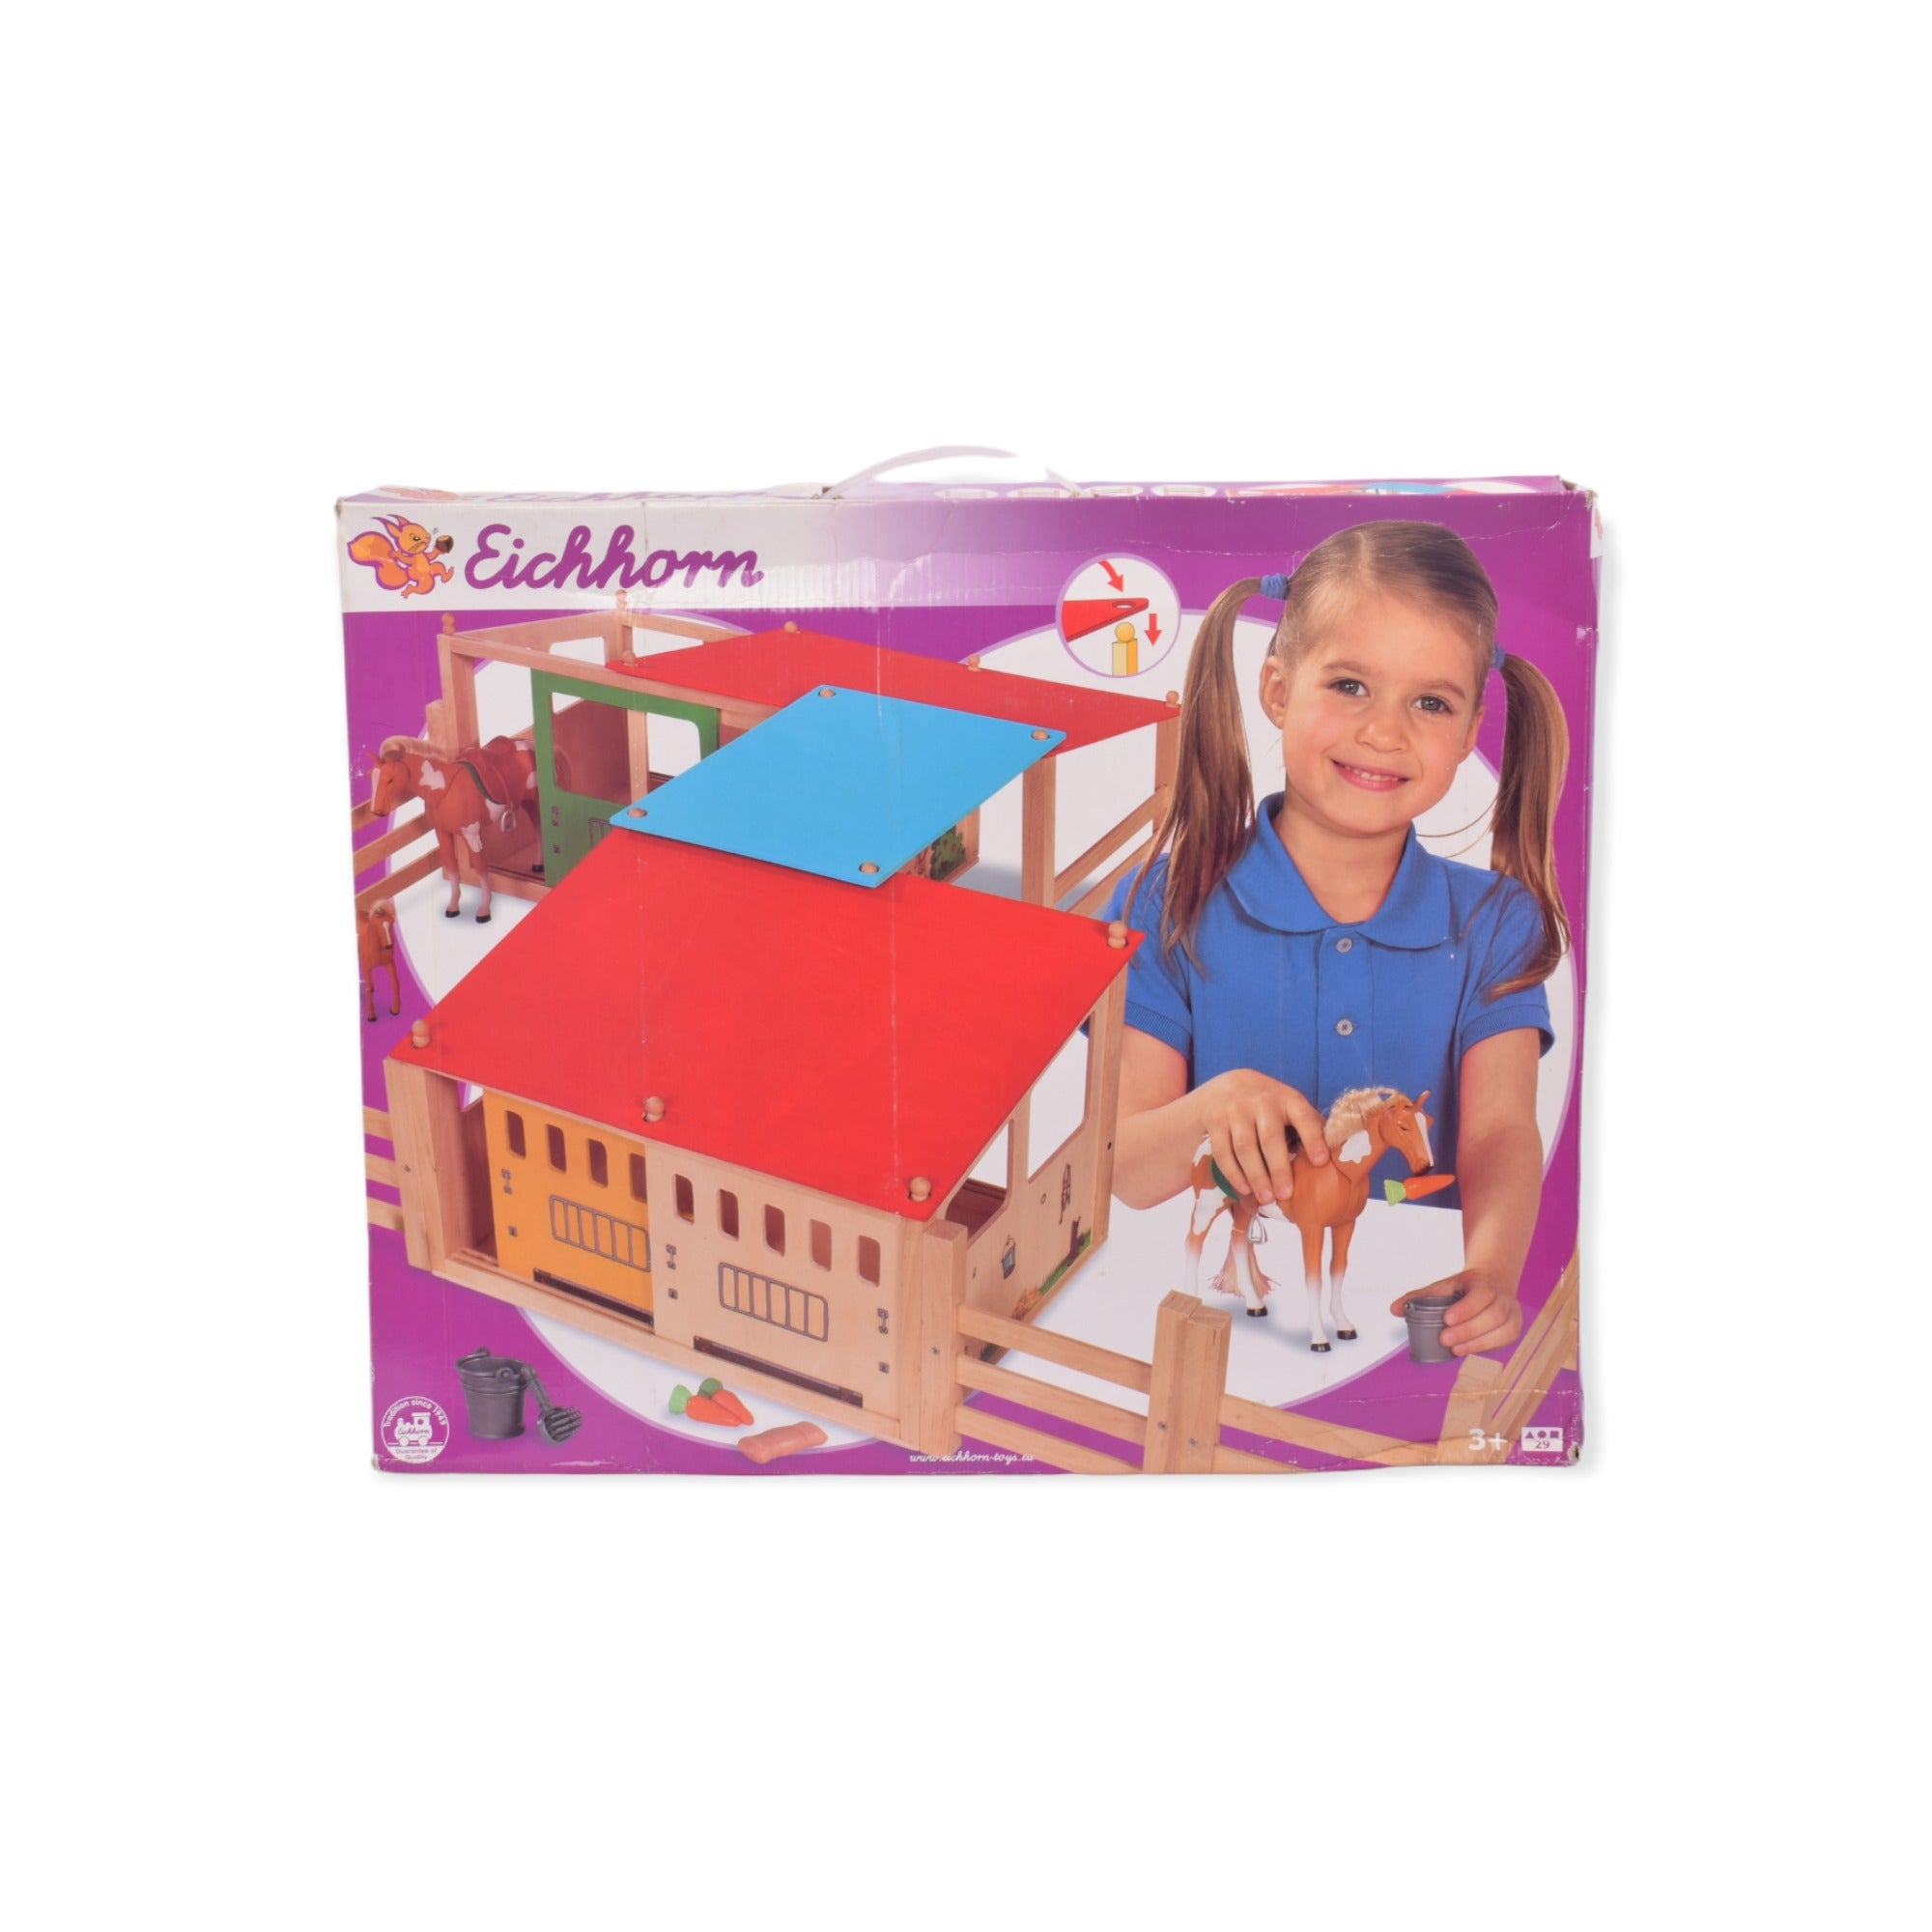 DIY Doll House Game Toy Set - Eichhorn